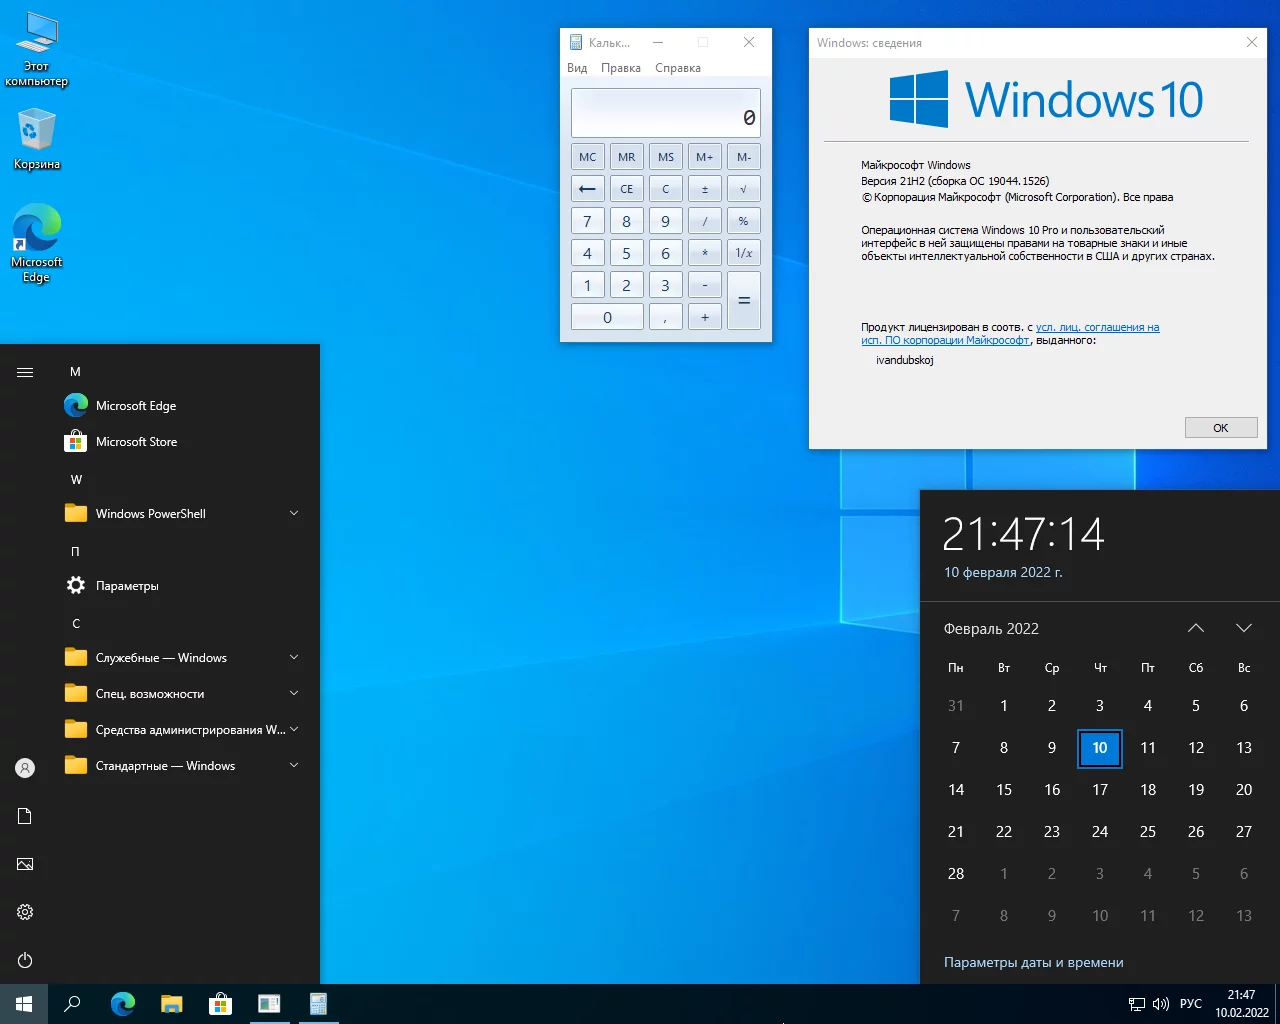 Windows 10 Pro VL x64 21Н2 (build 19044.1526) by ivandubskoj 10.02.2022